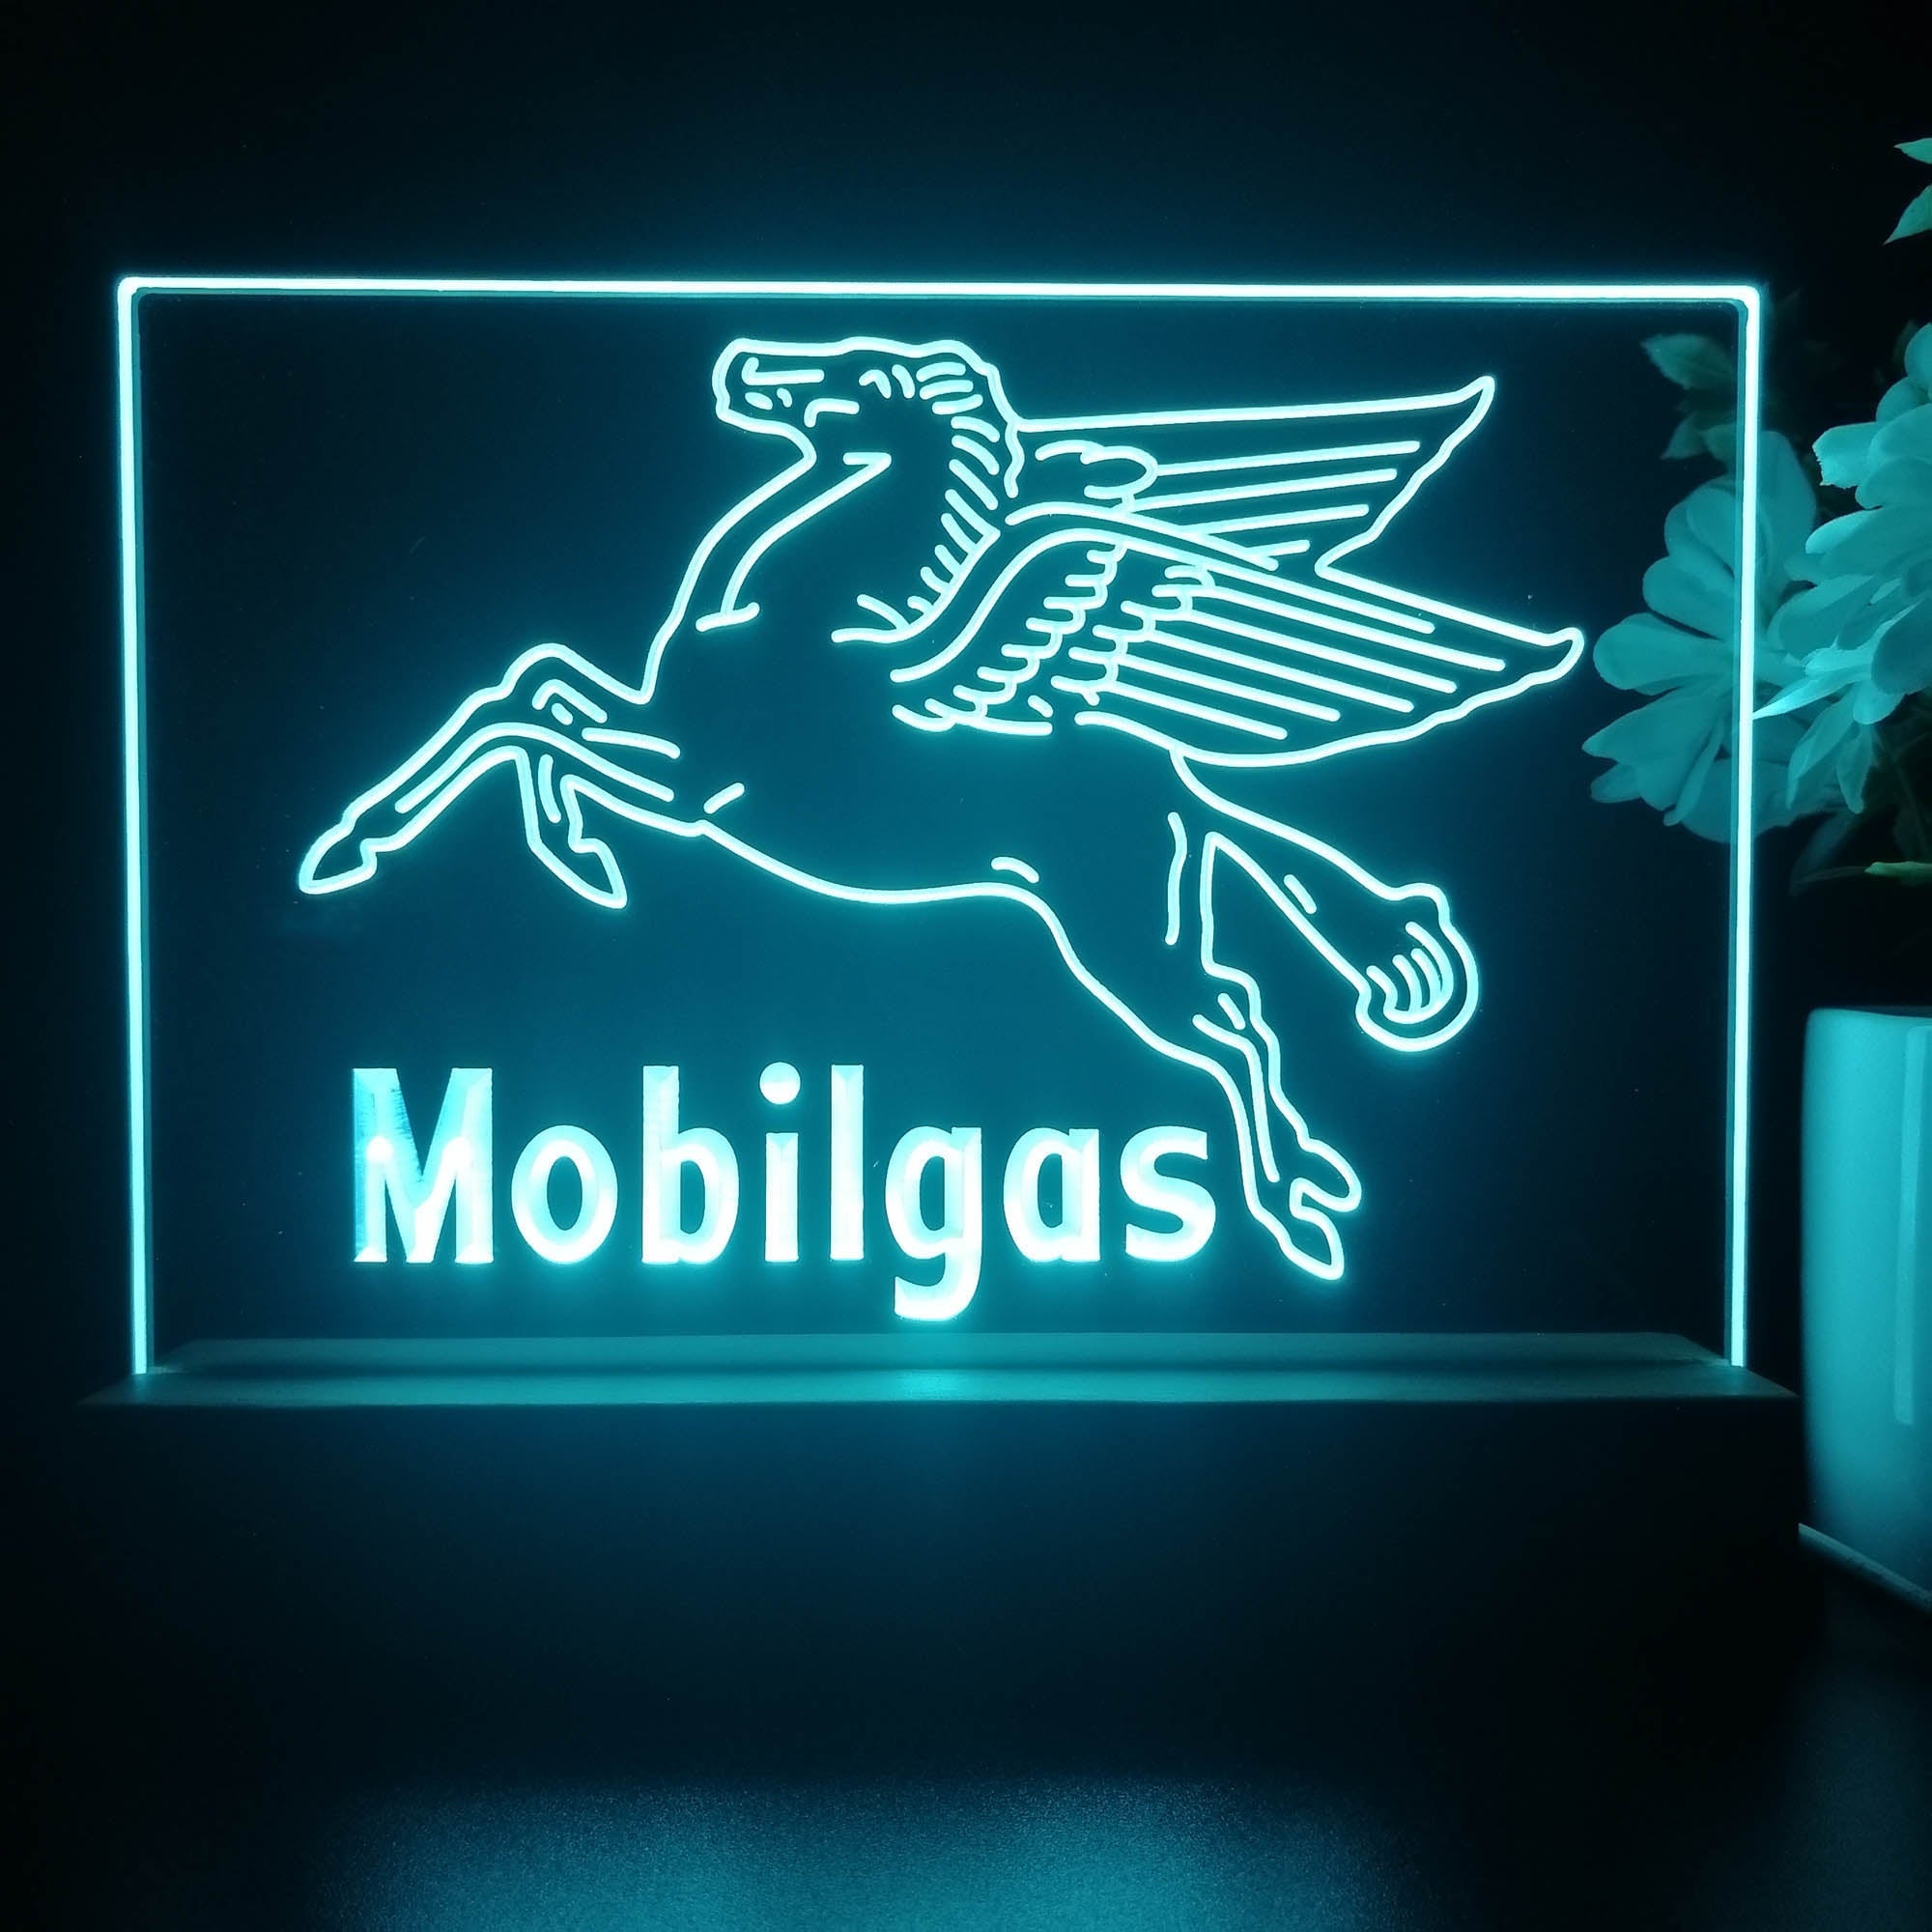 Mobil Gas Flying Horse 3D Illusion Night Light Desk Lamp